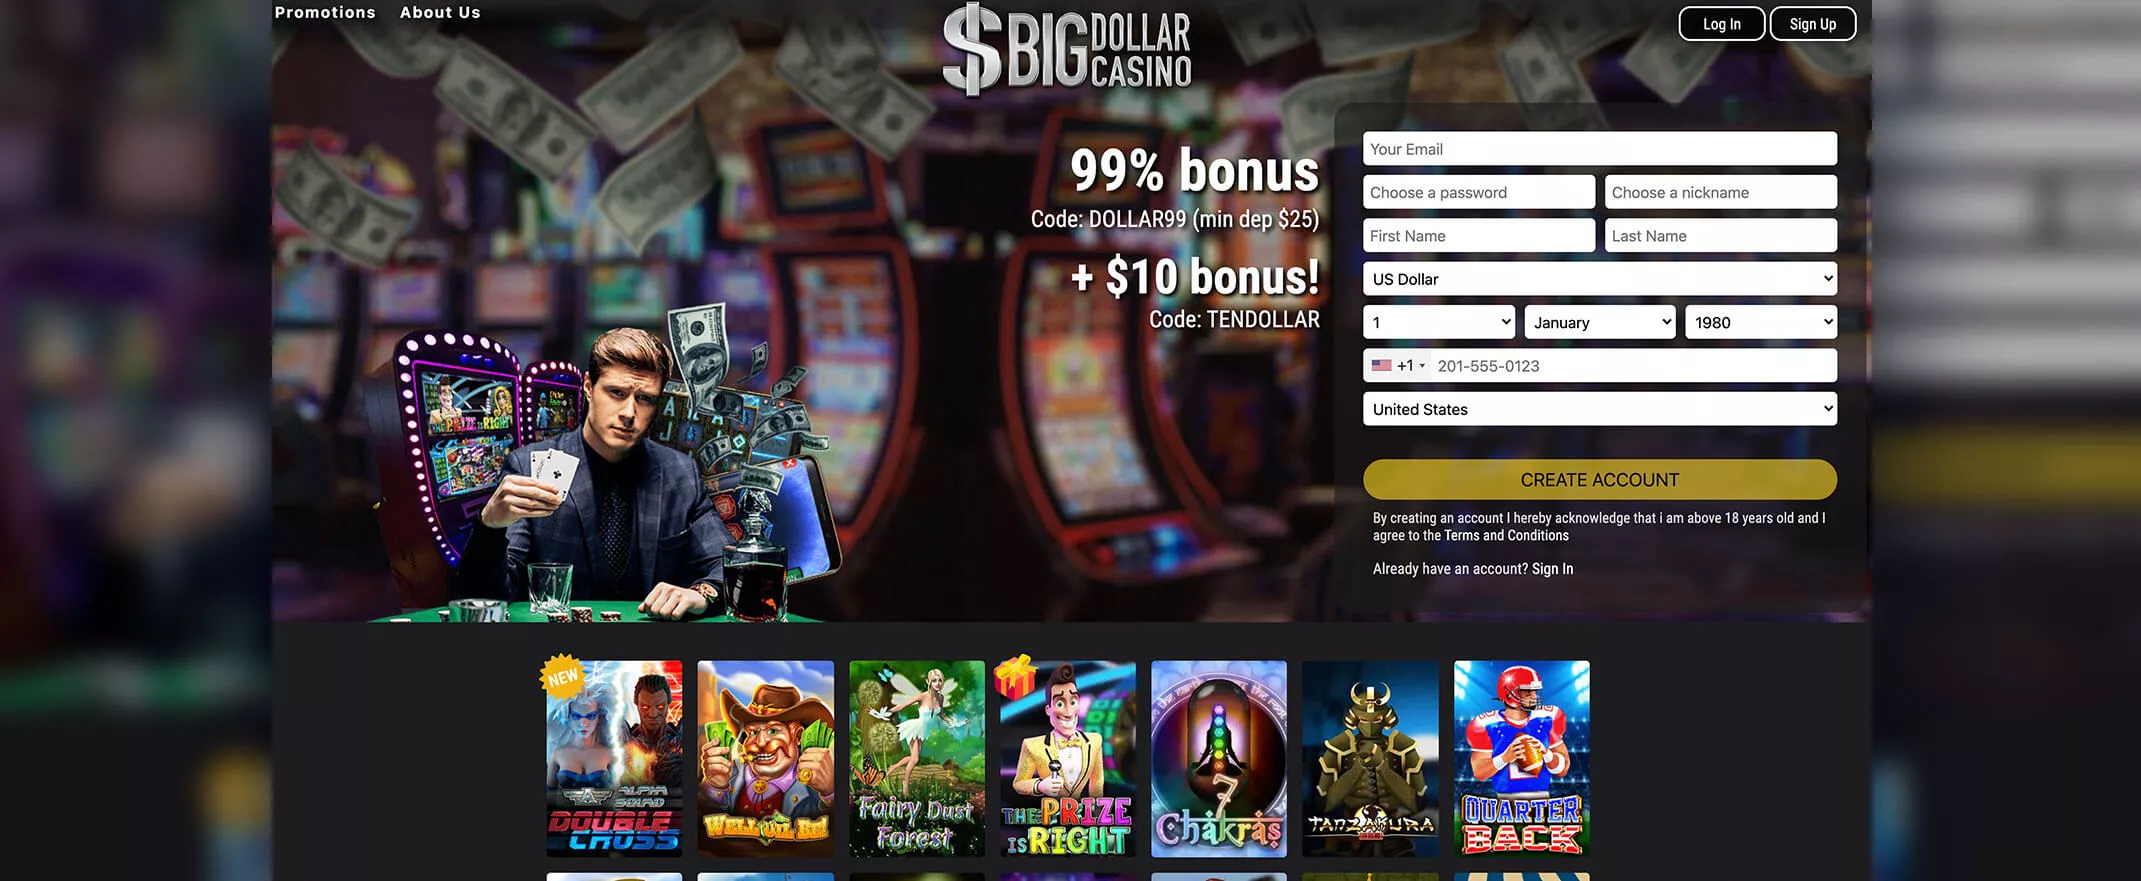 Big Dollar homepage screenshot